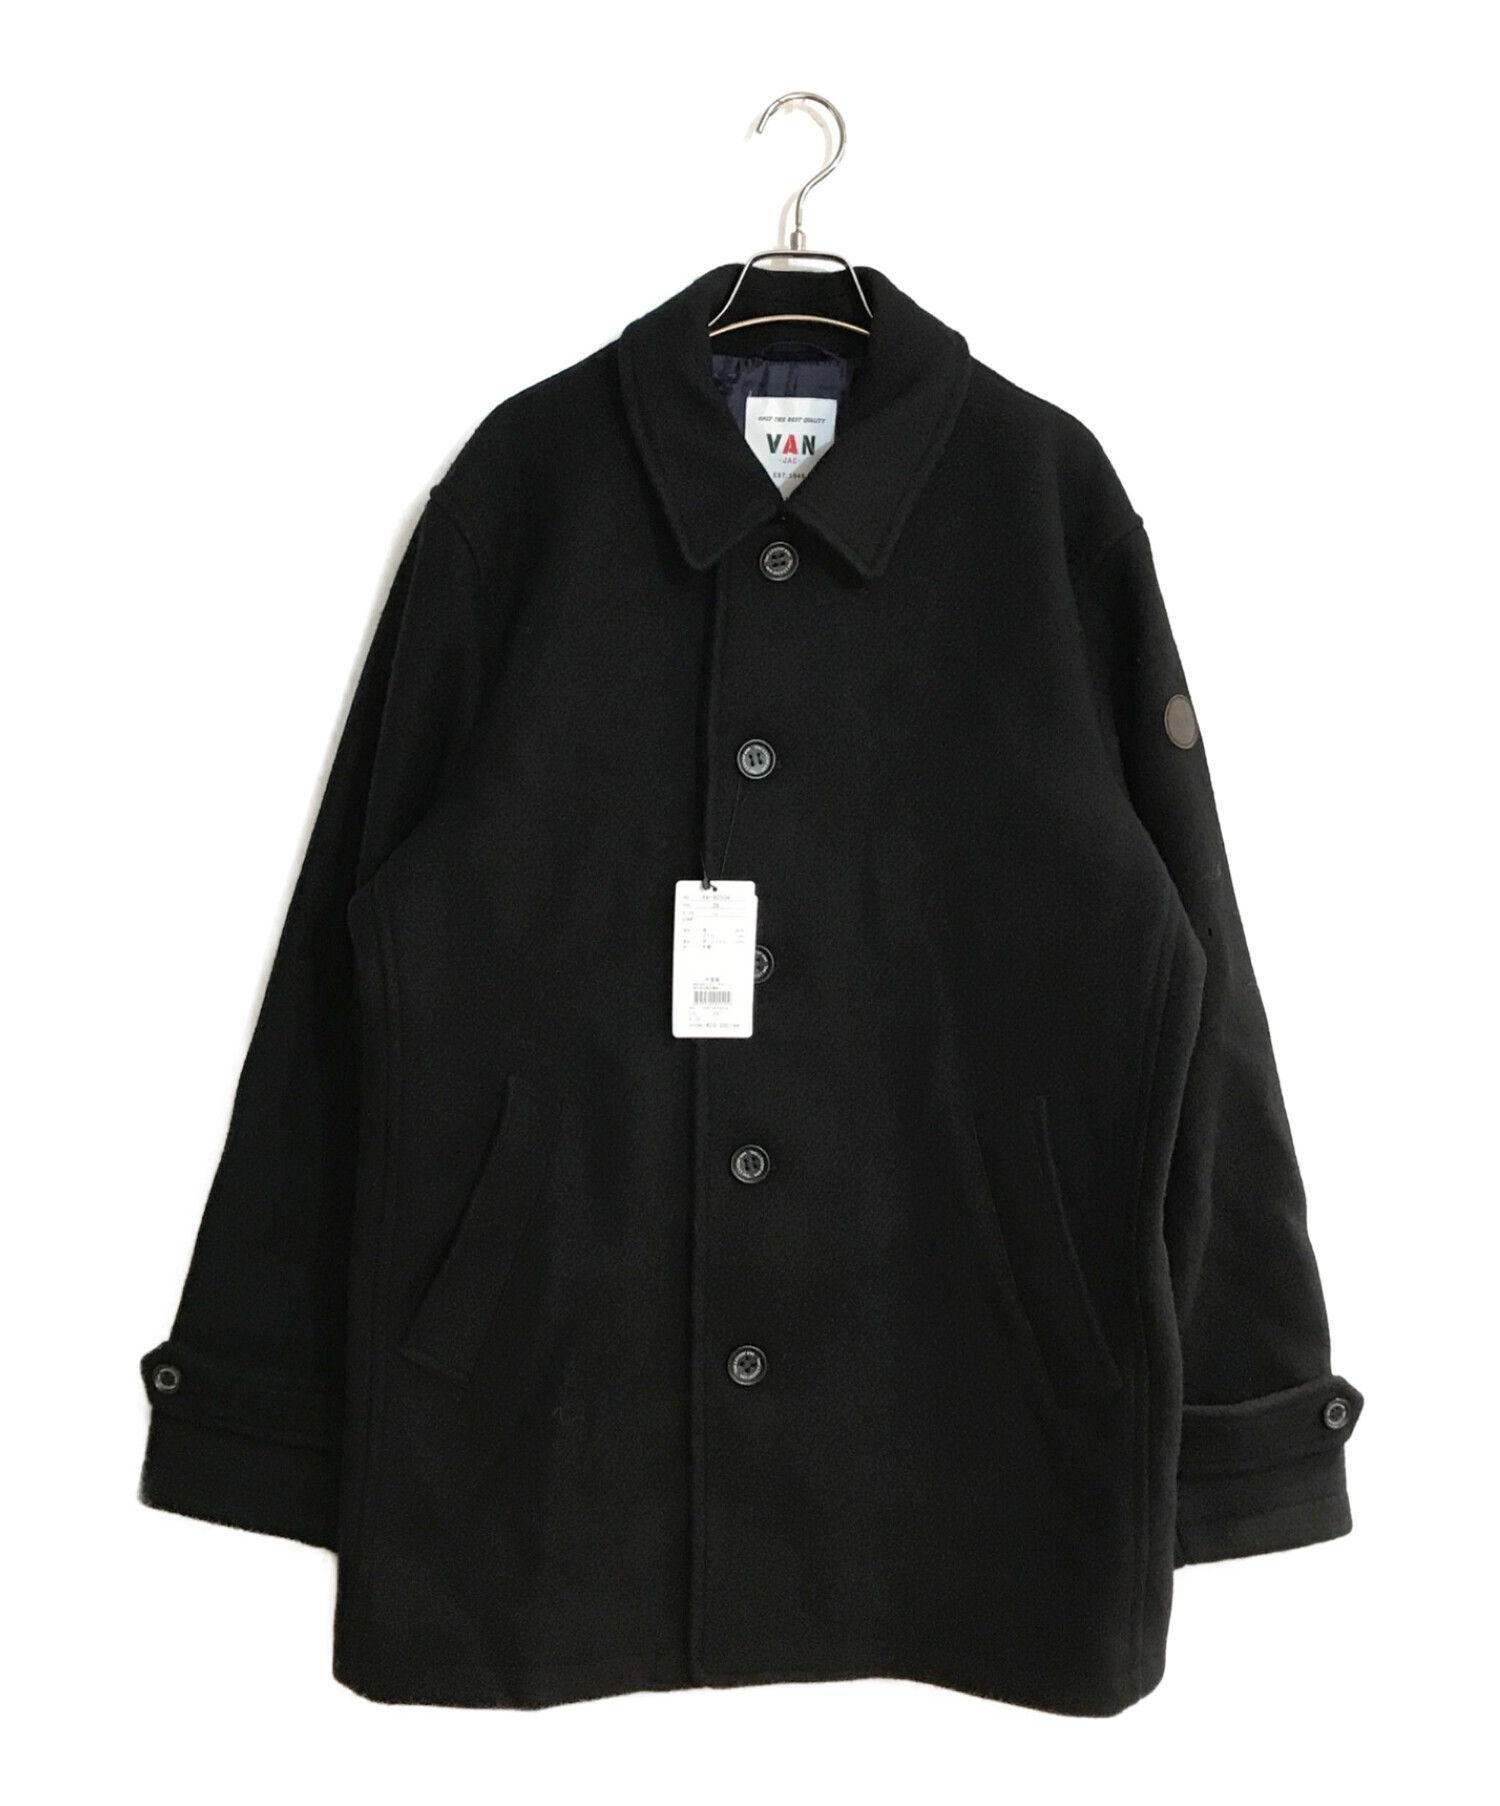 VAN (ヴァン) ステンカラーウールコート ブラック サイズ:SIZE ⅬⅬ 未使用品